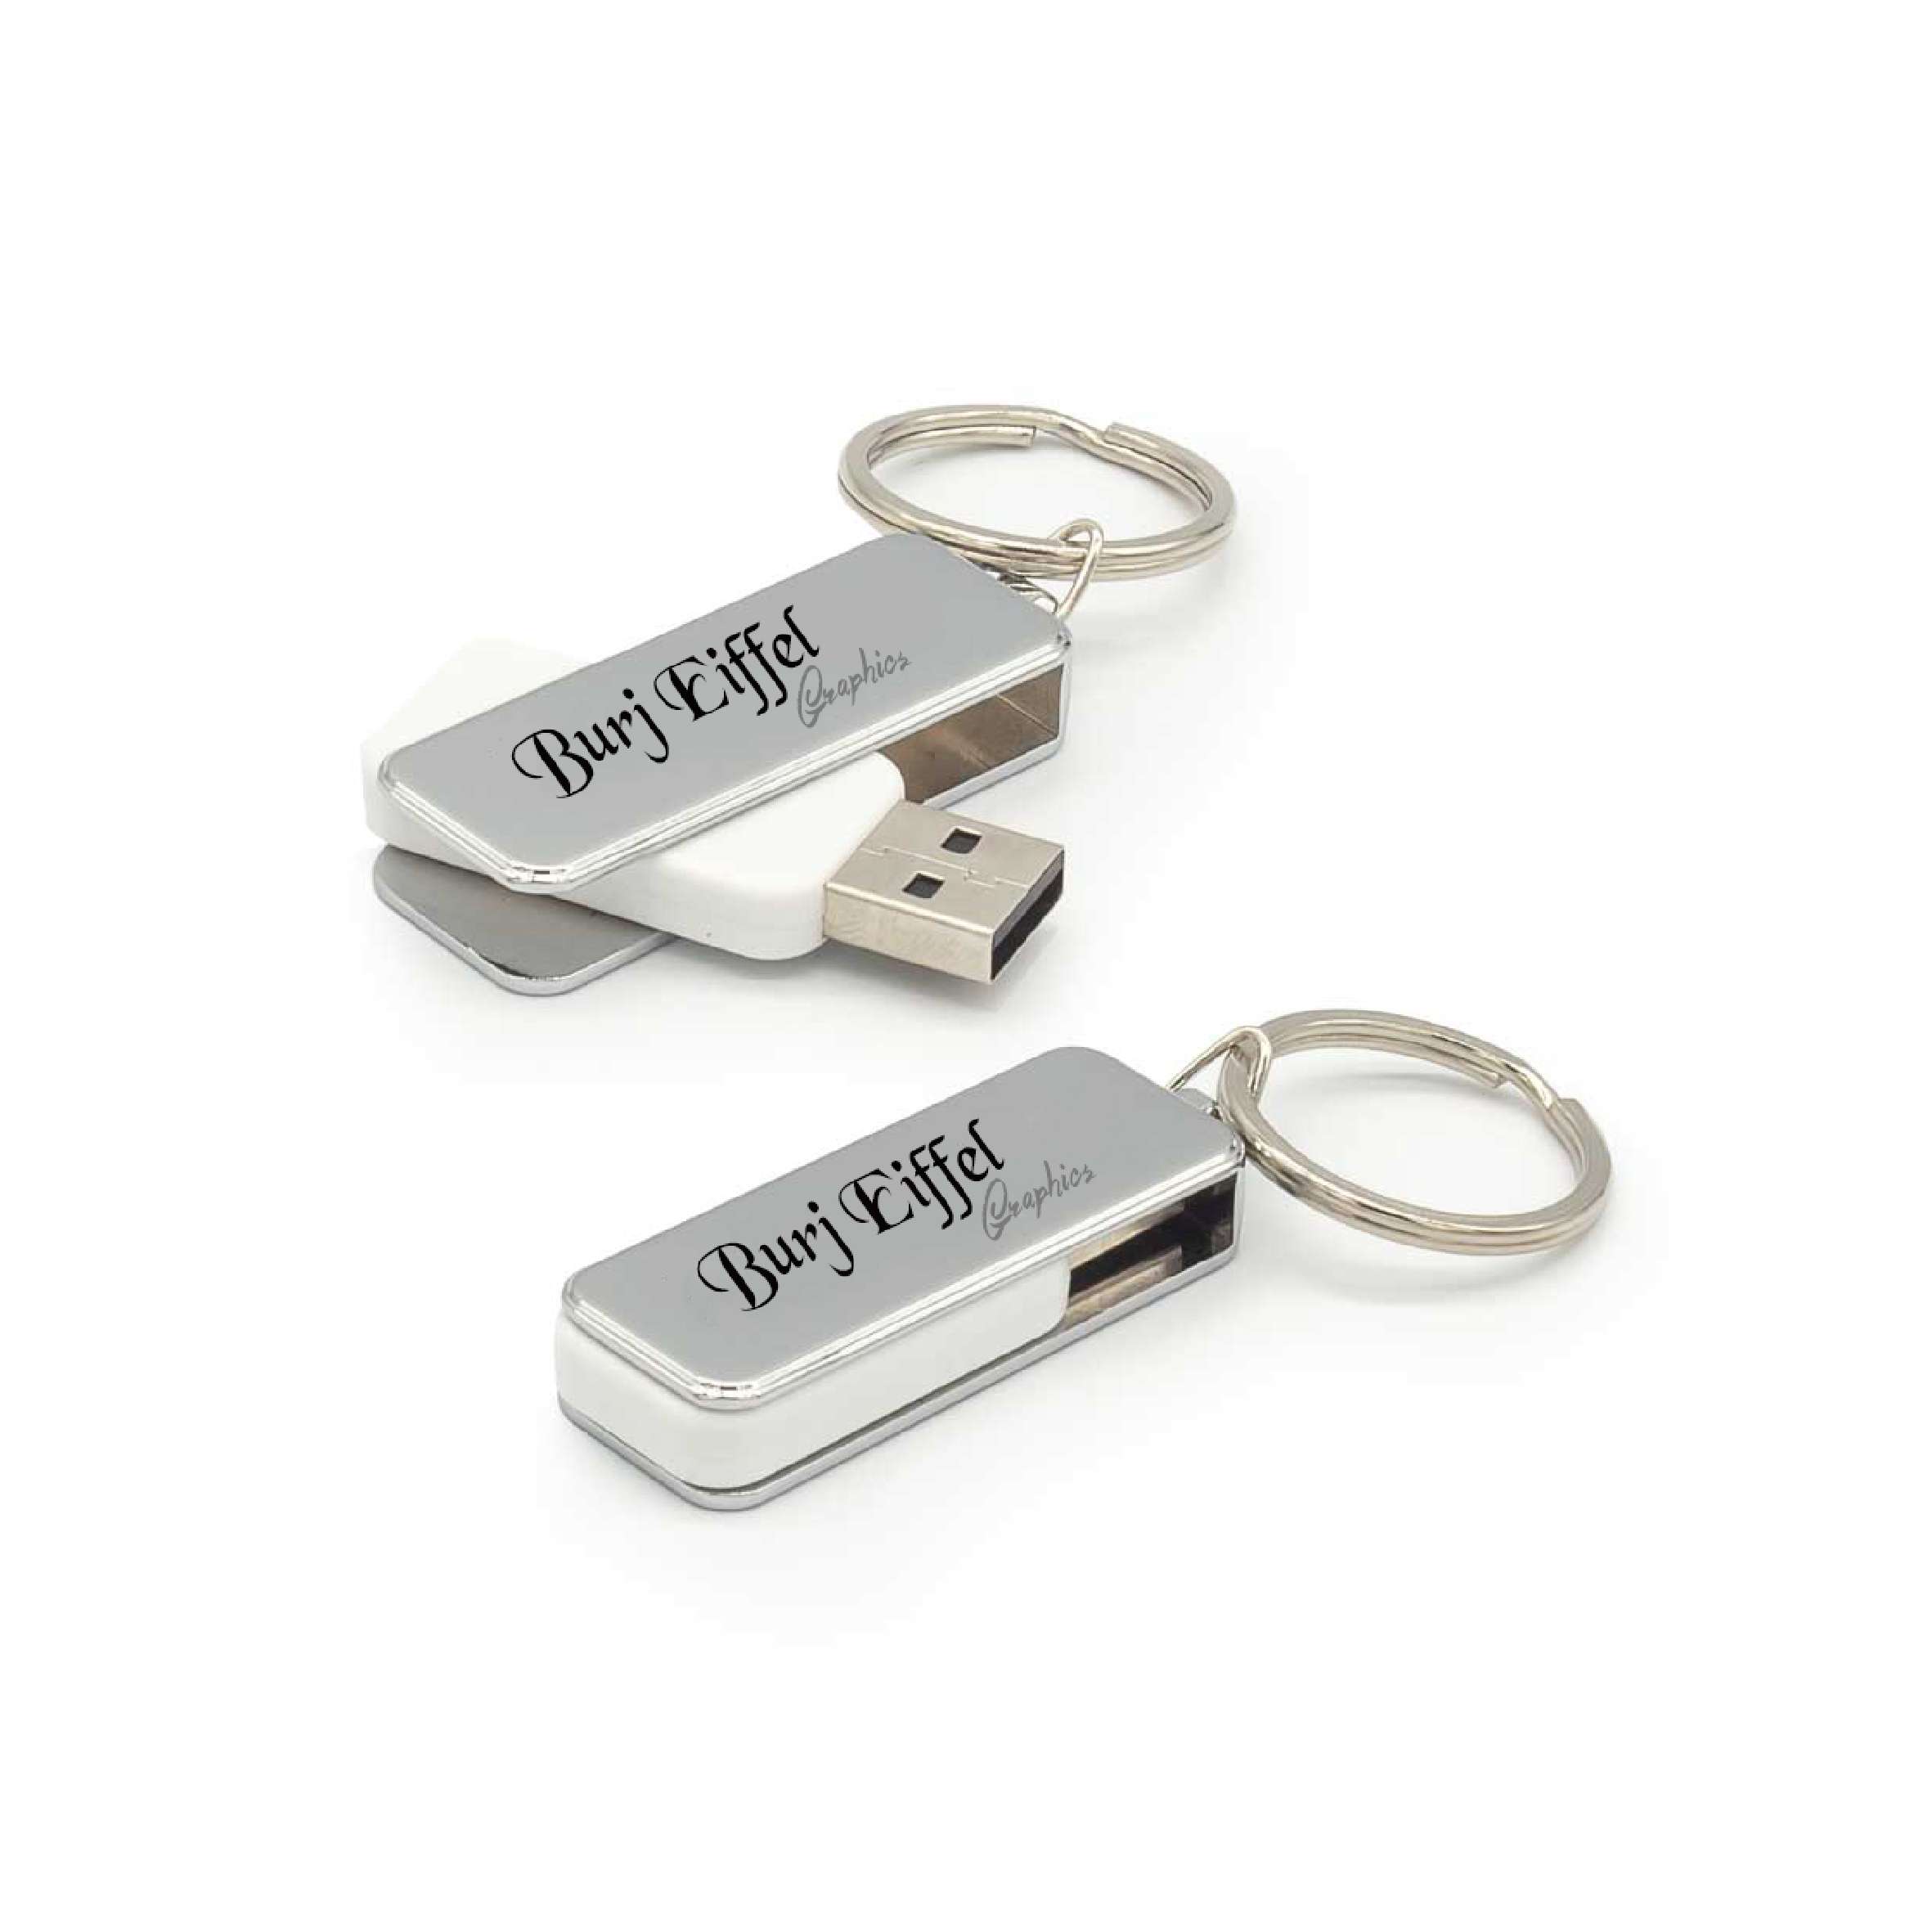 Key chain with Metal Swivel USB